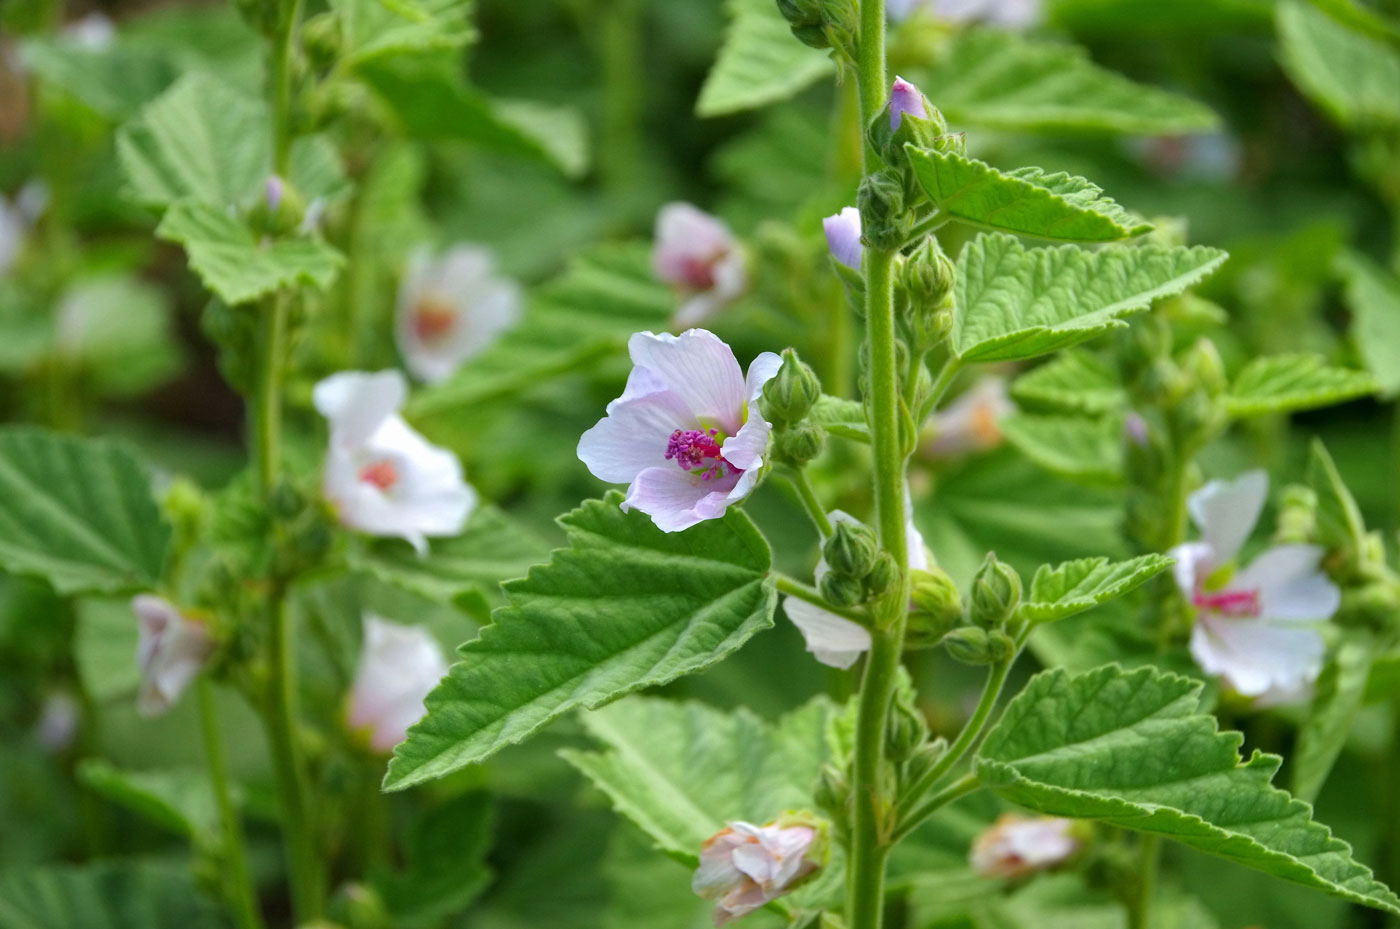 Herbal Focus: Marshmallow <span class="latin">(Althaea officinalis)</span>